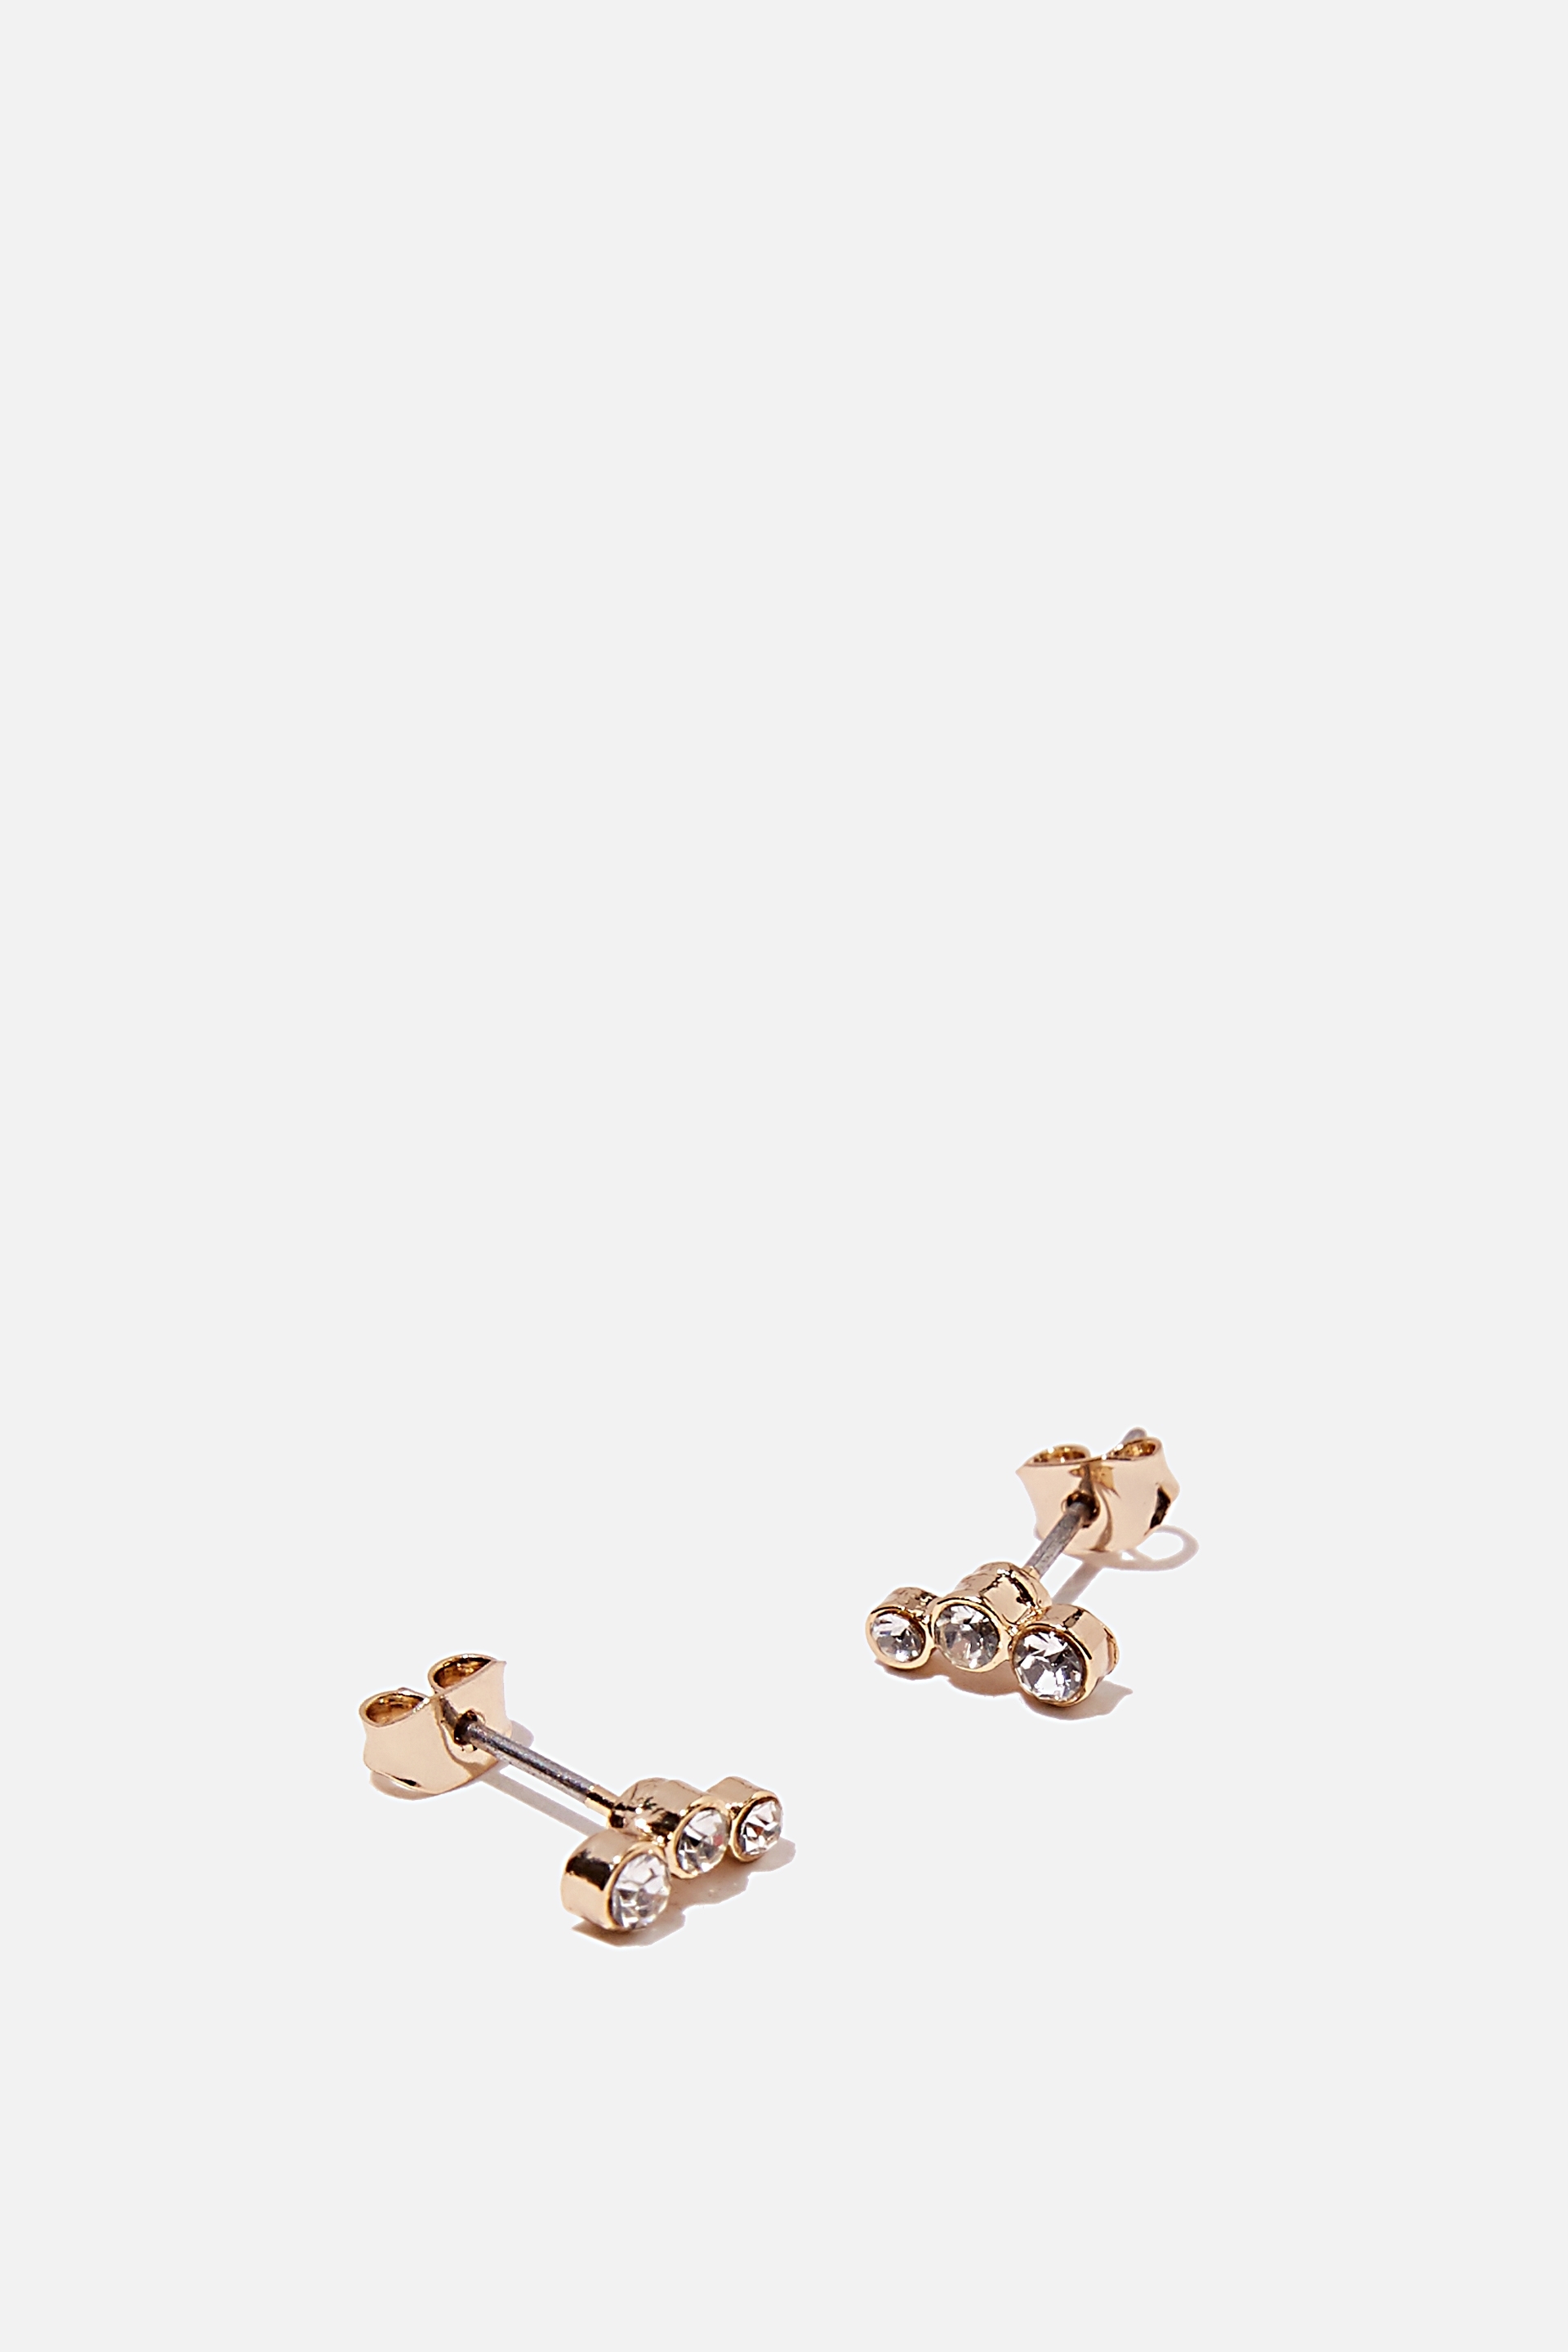 Rubi - Premium Stud Earrings - Gold plated triple crystal